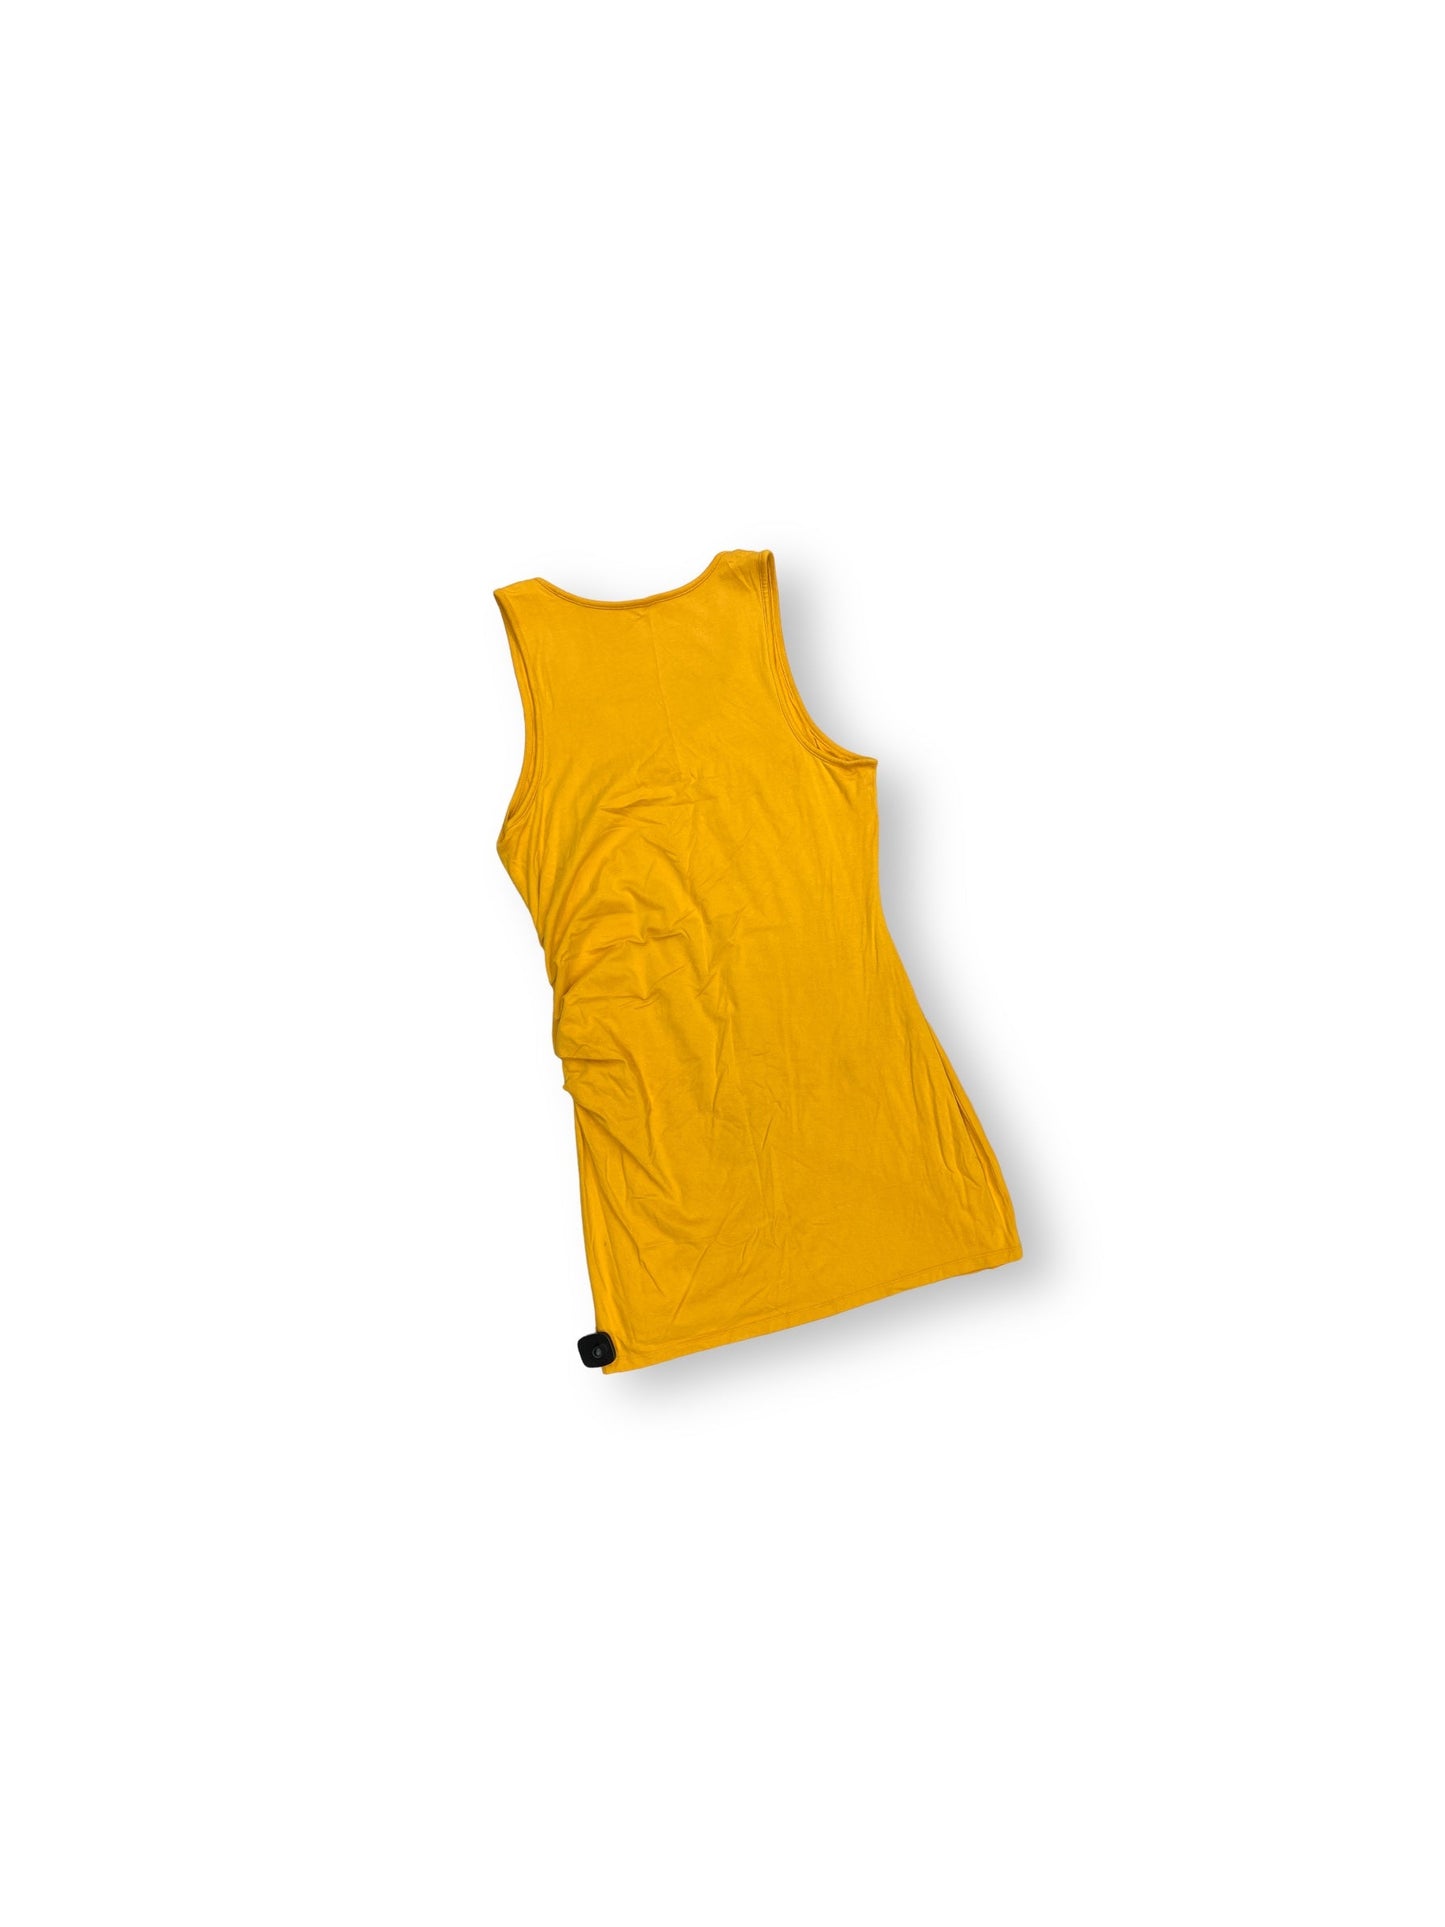 Athletic Dress By Athleta  Size: 1x